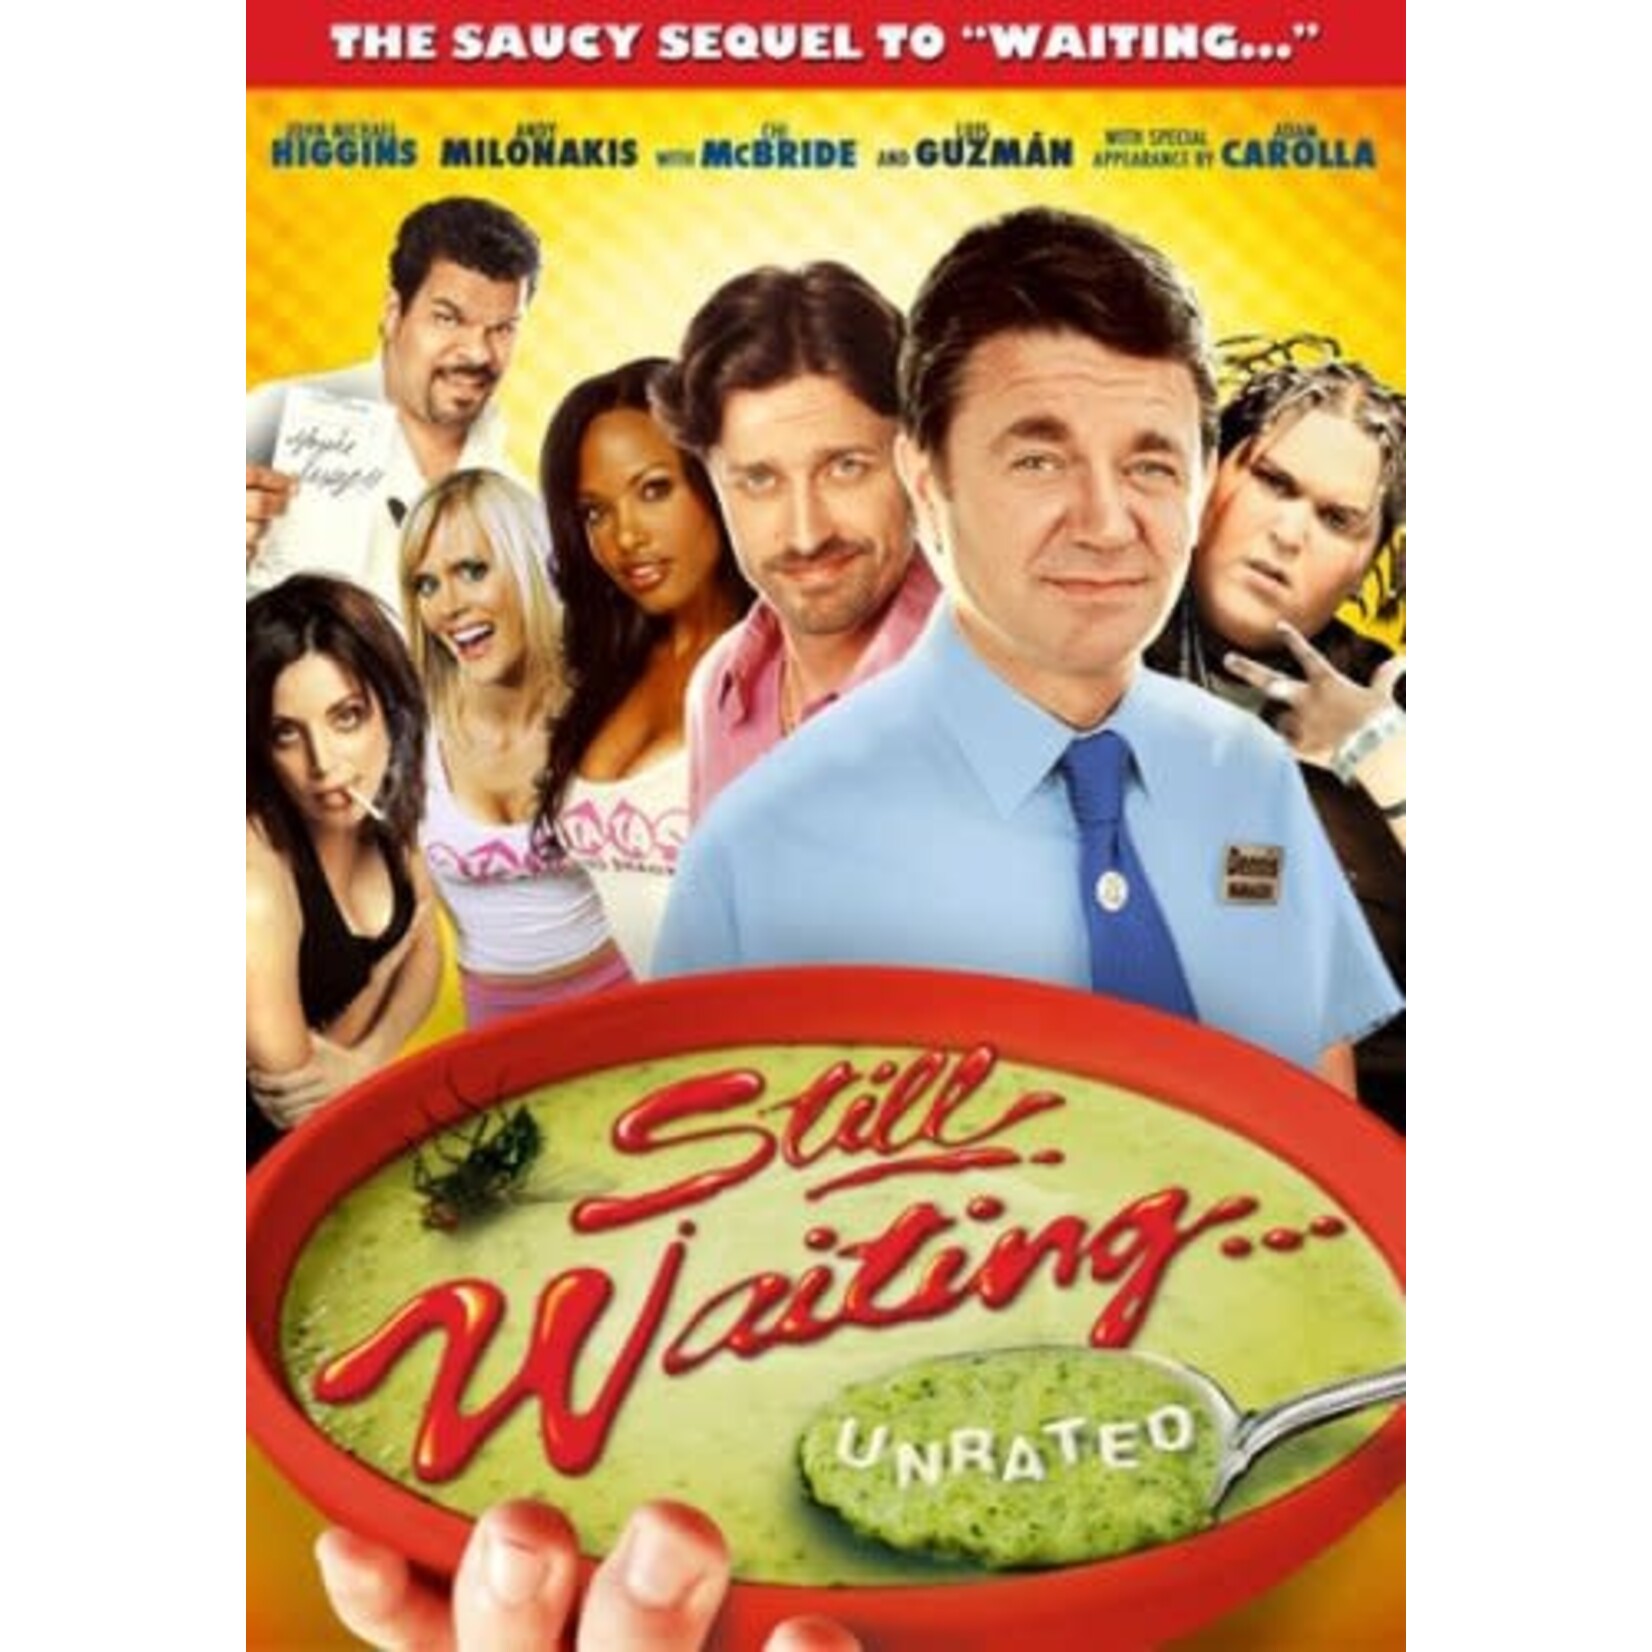 Waiting 2: Still Waiting [USED DVD]